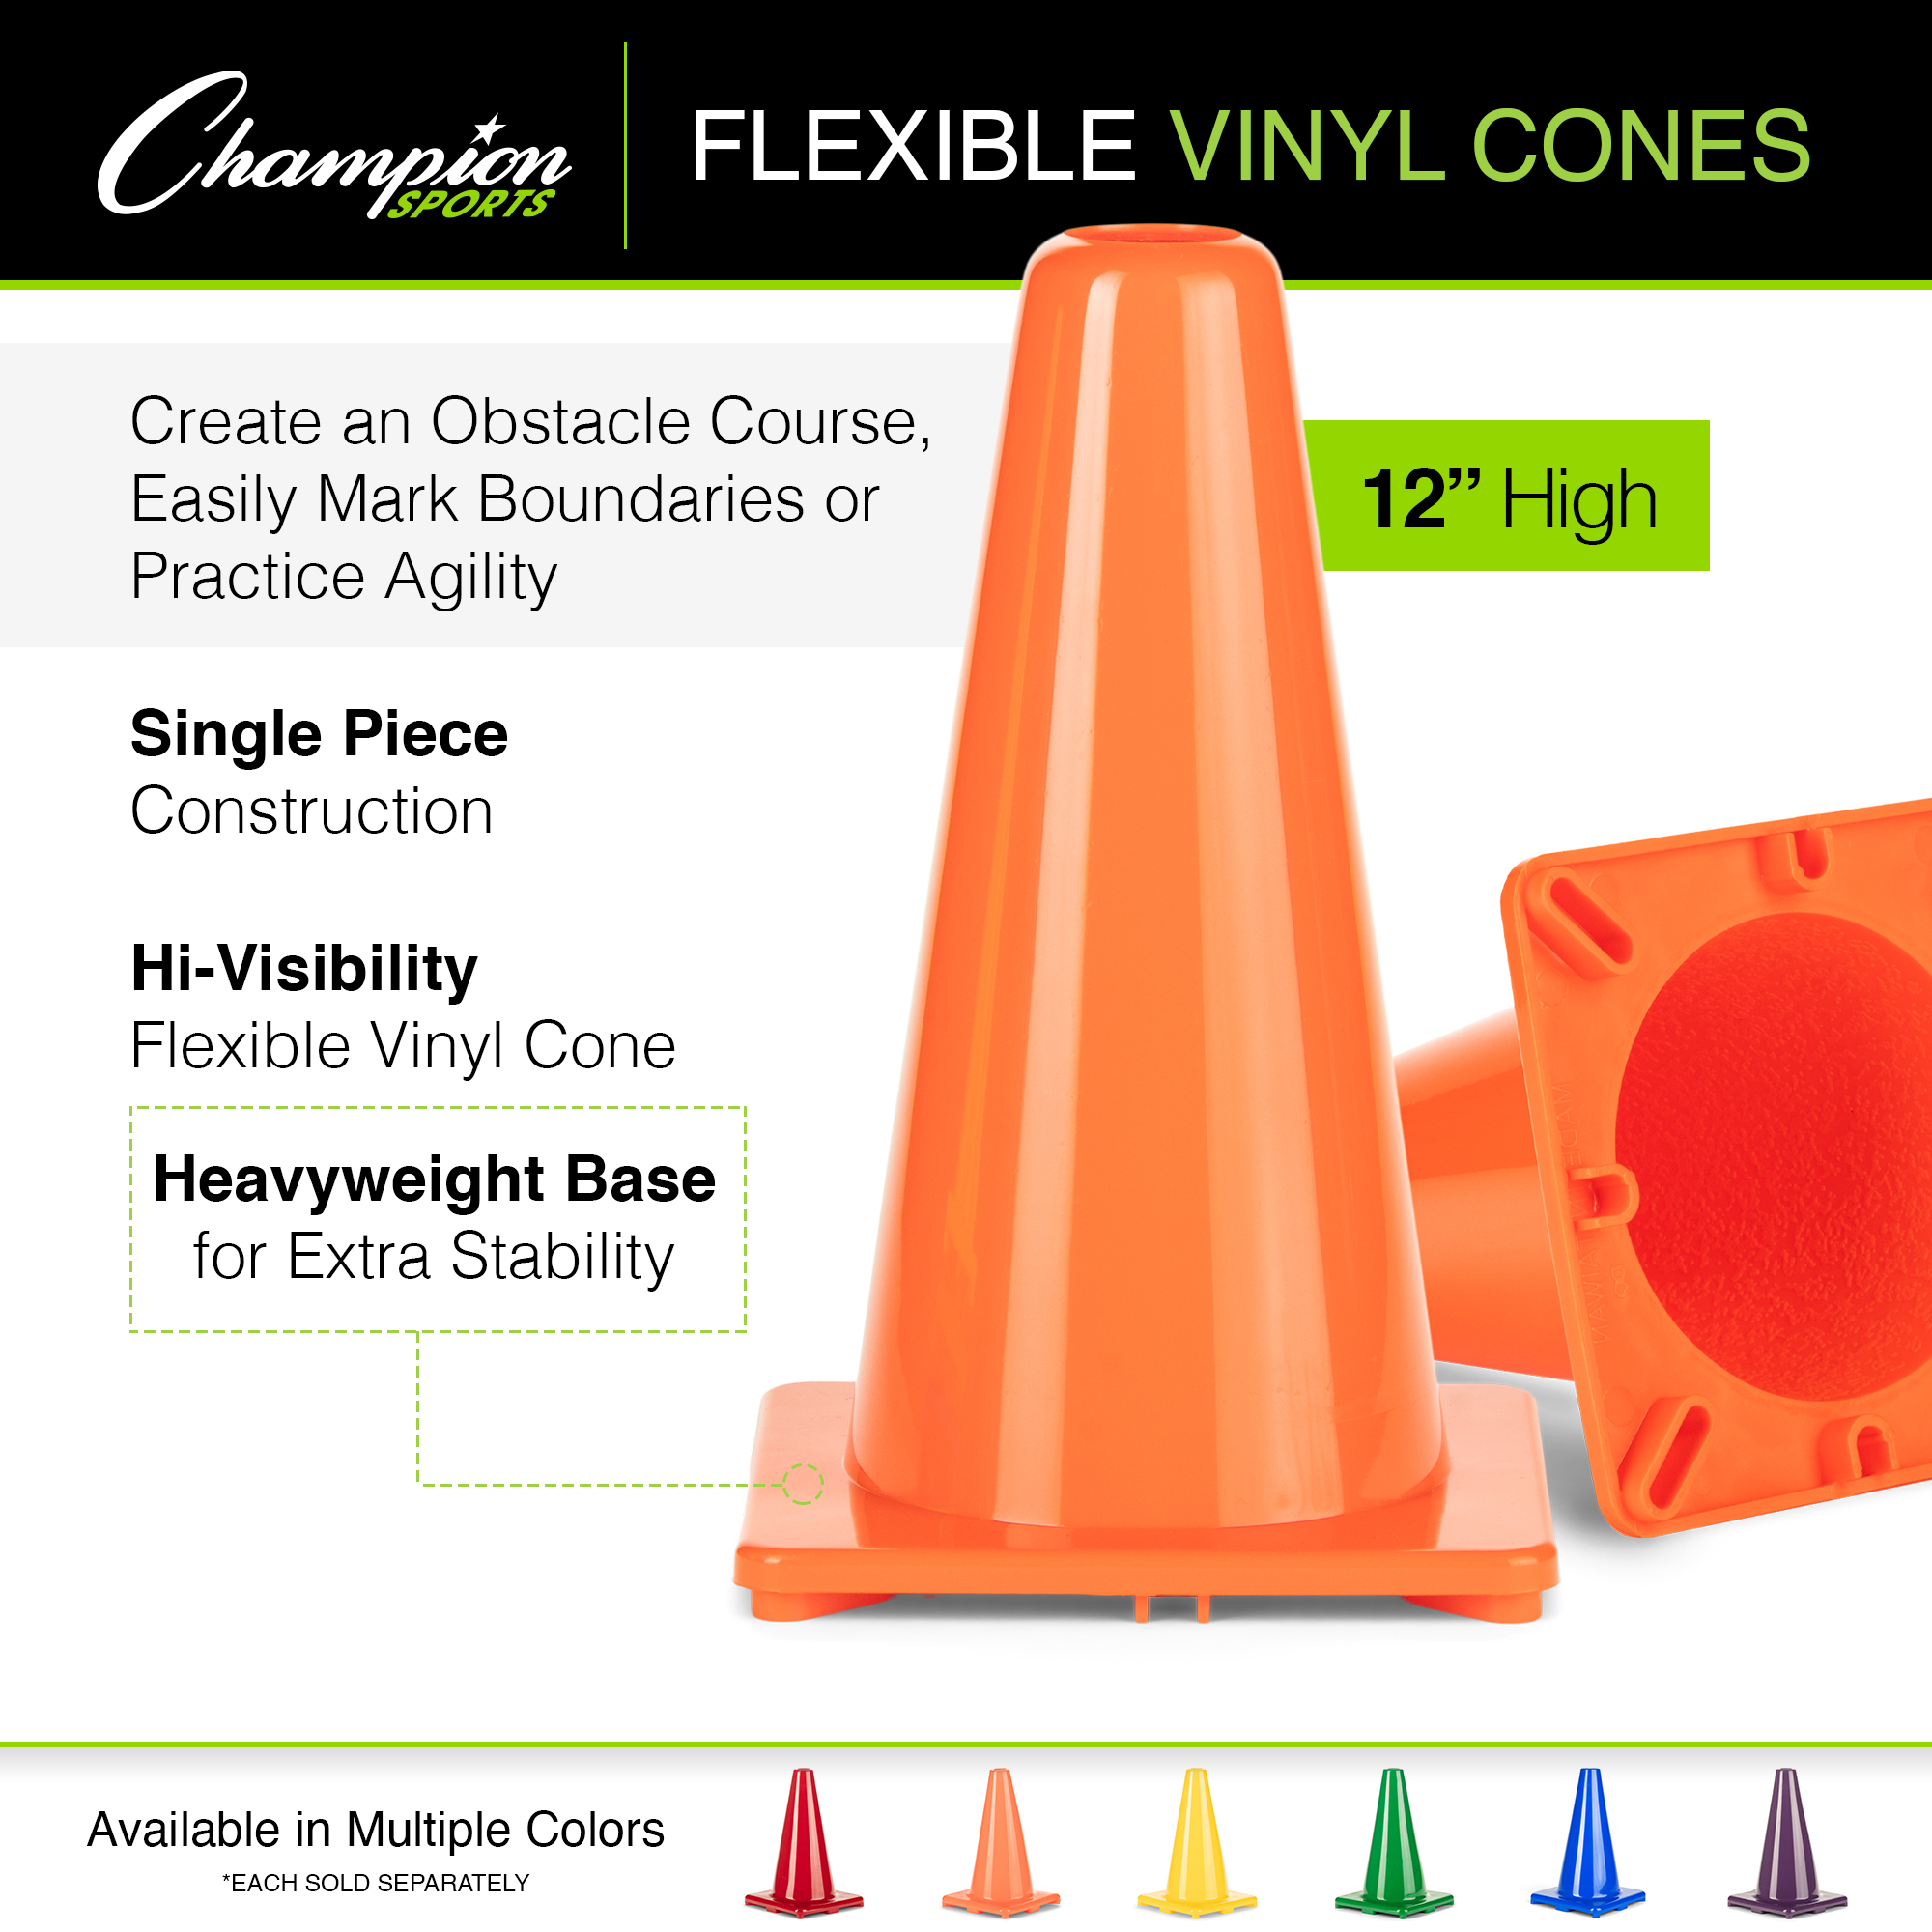 Champion Sports 12 Inch High Visibility Flexible Vinyl Cone Orange - image 2 of 2